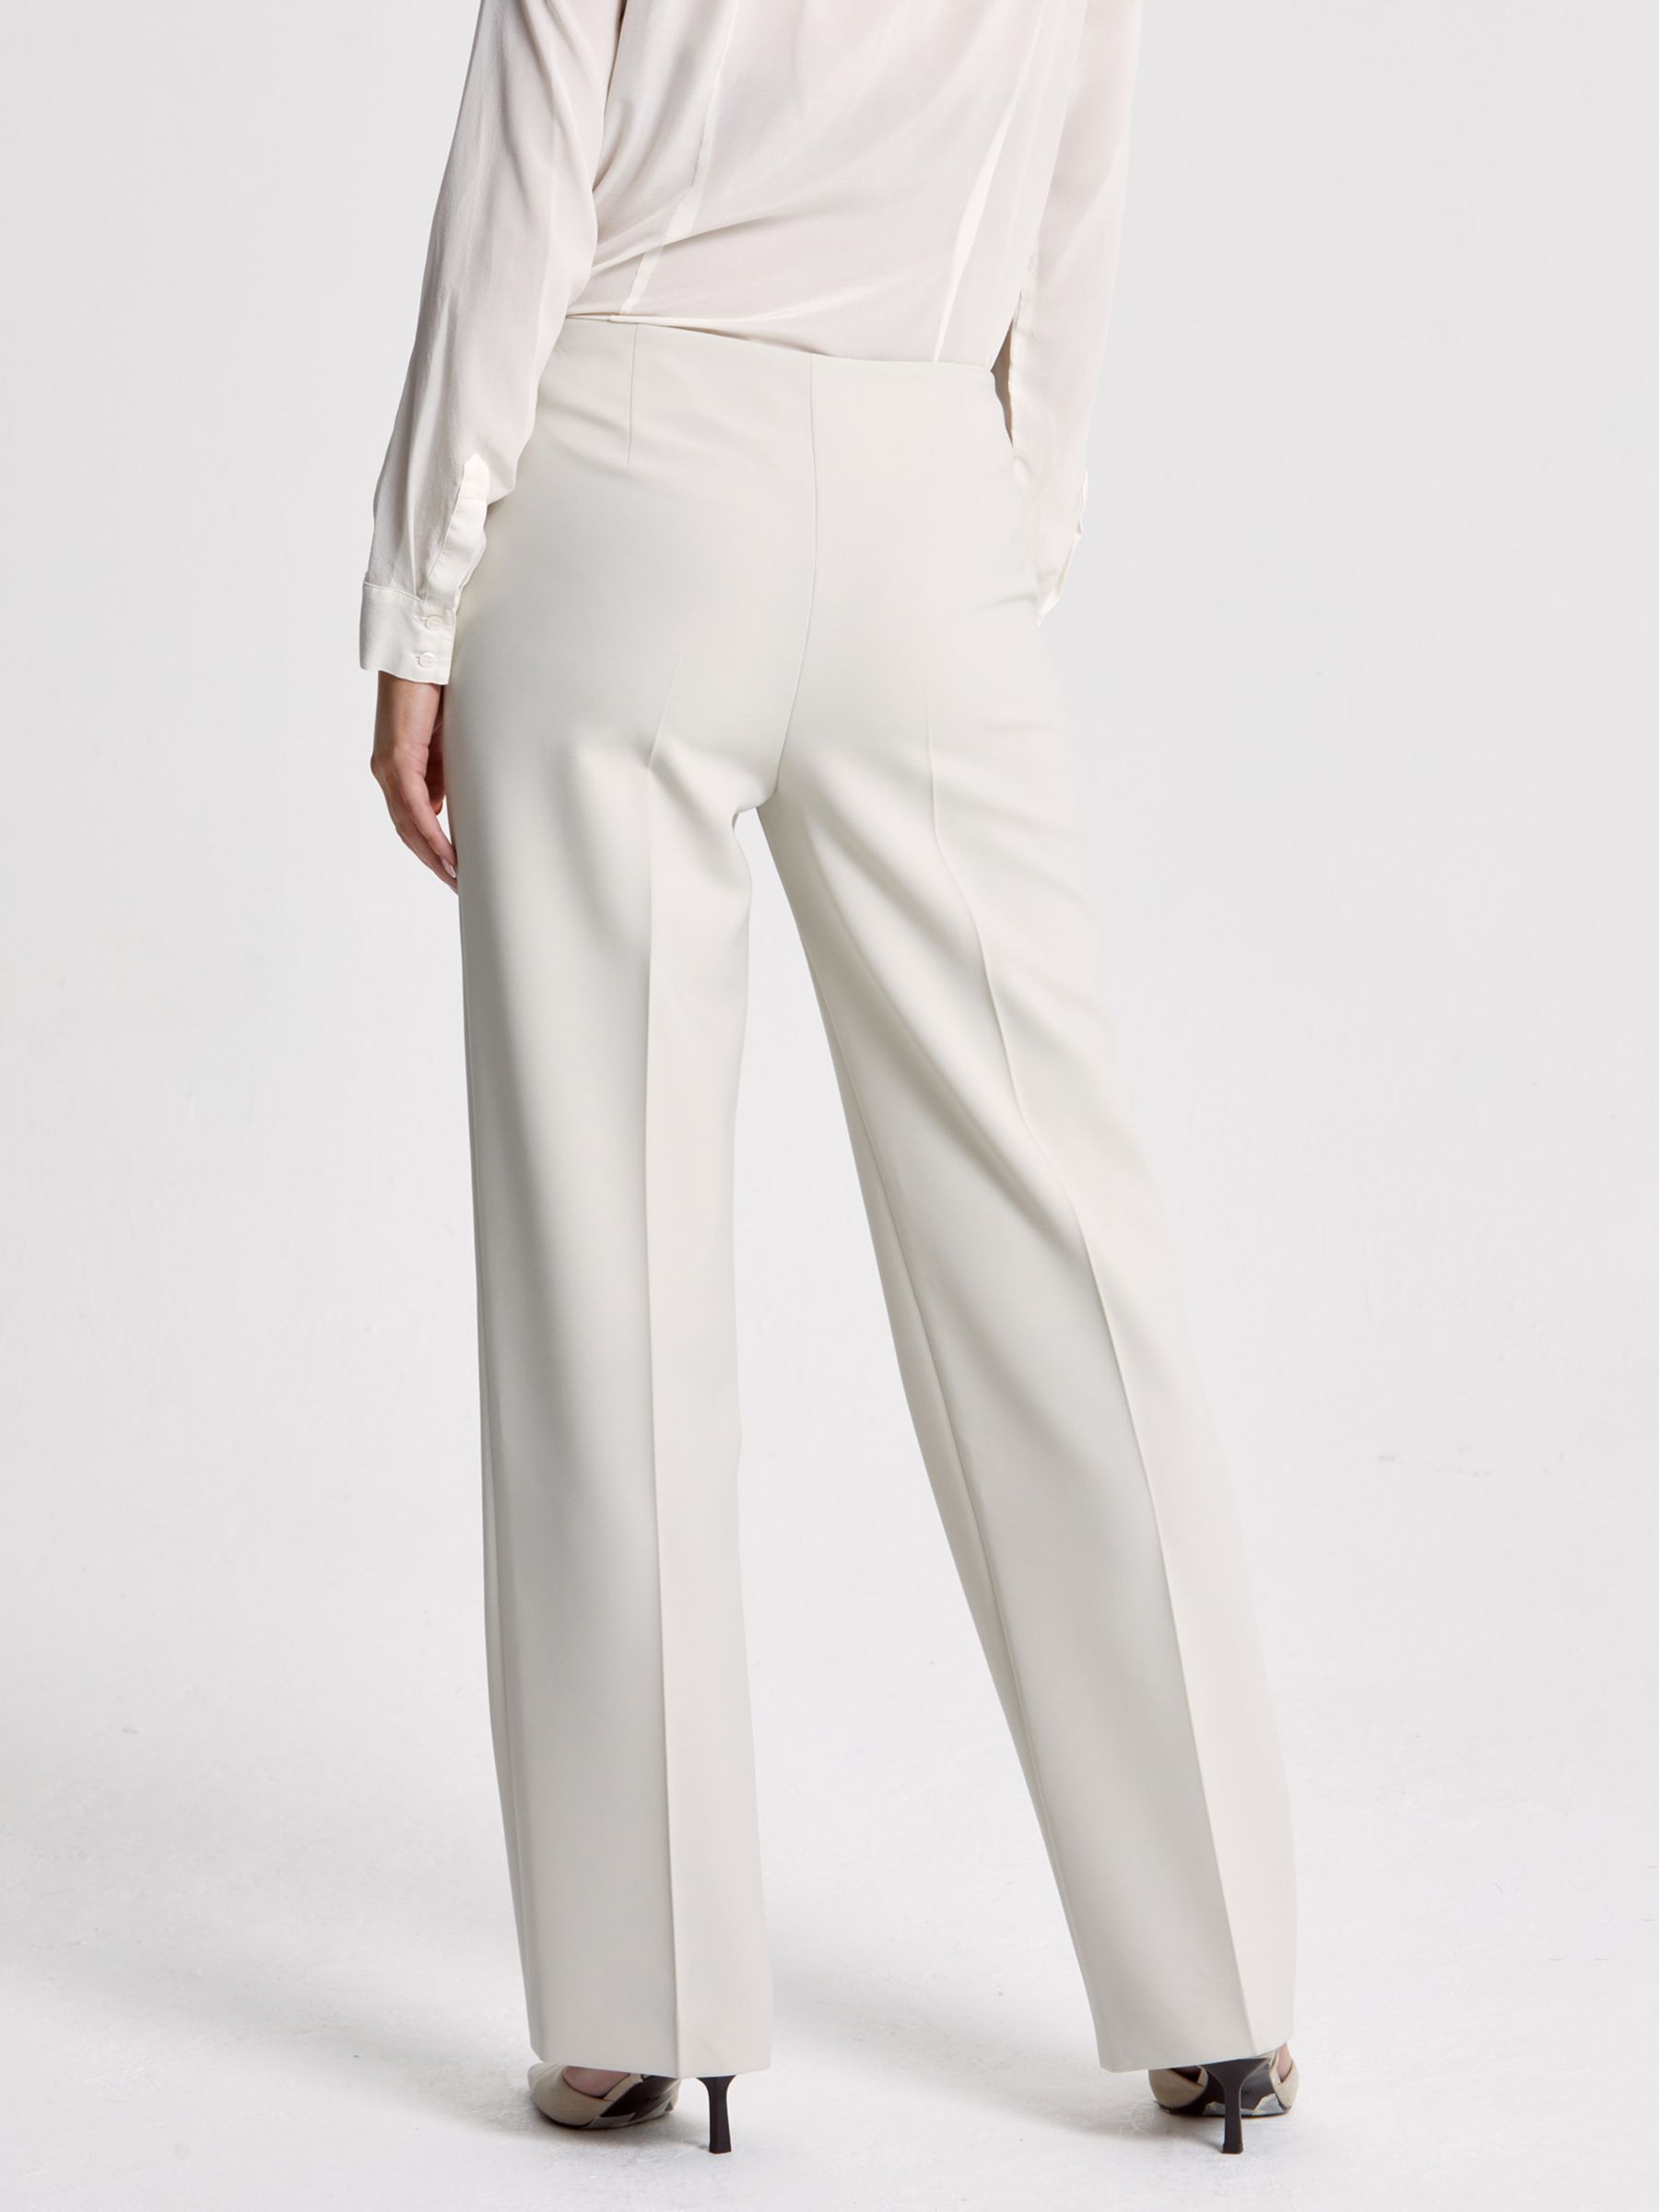 Helen McAlinden Berna Old Trousers, Ivory at John Lewis & Partners